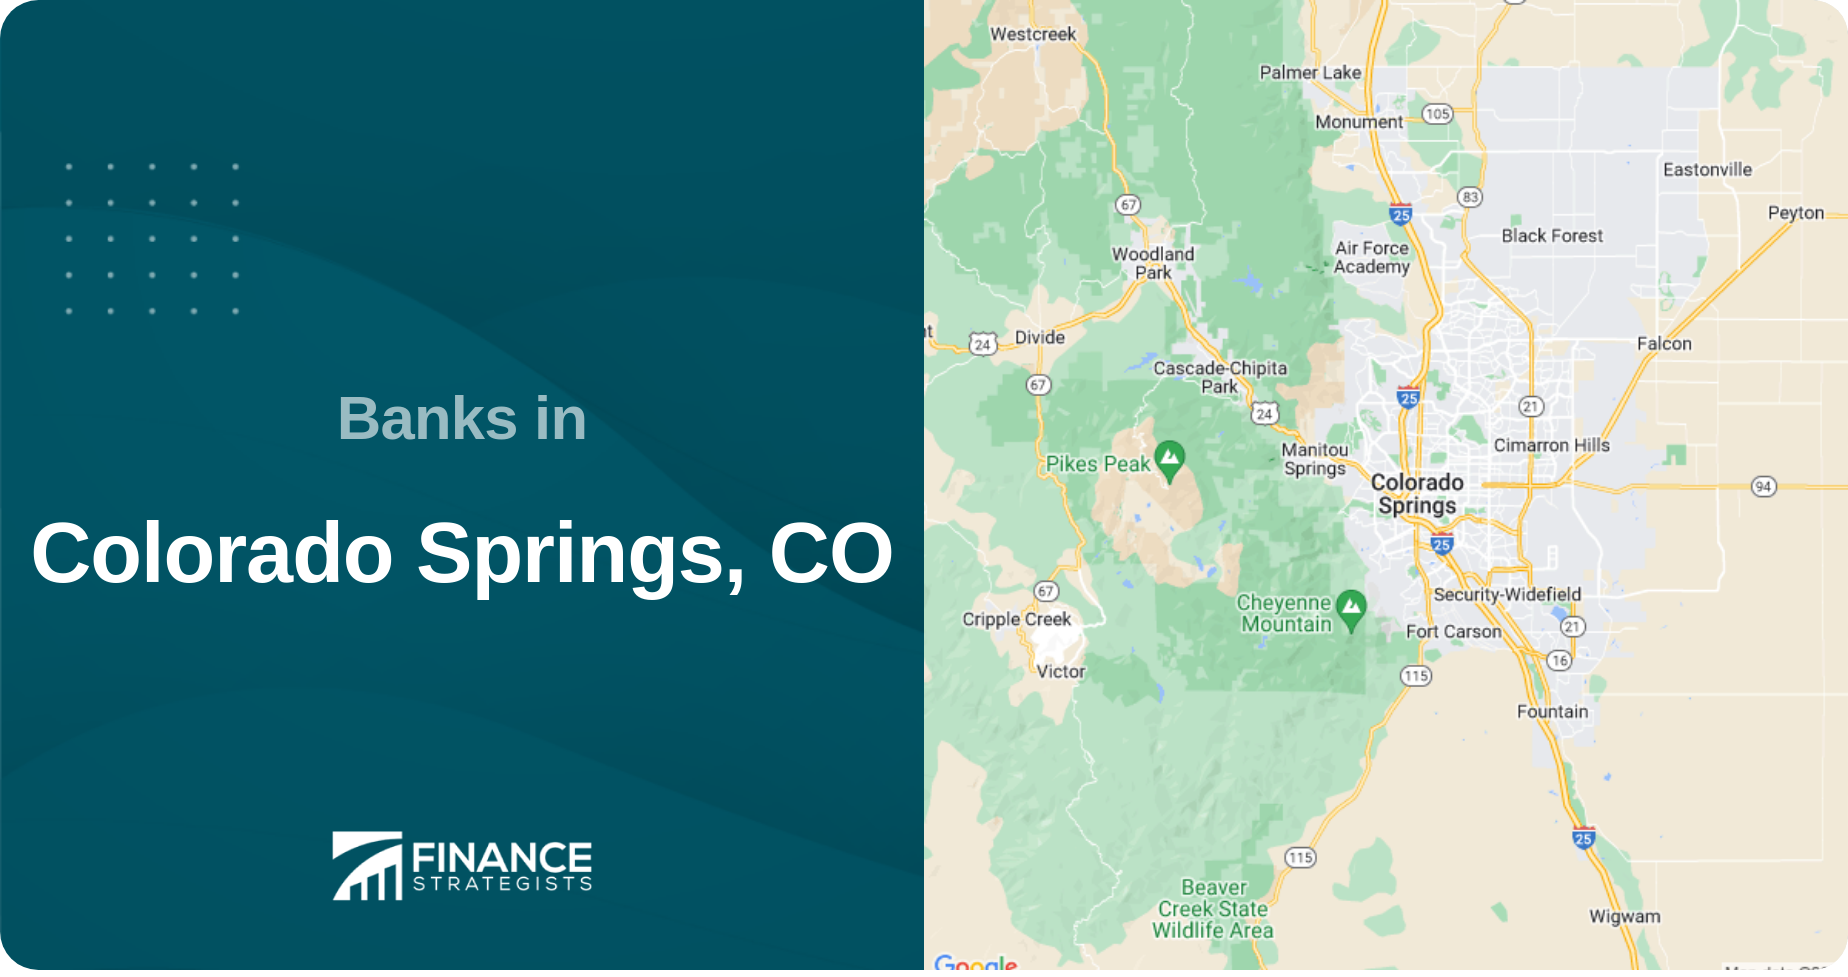 Banks in Colorado Springs, CO